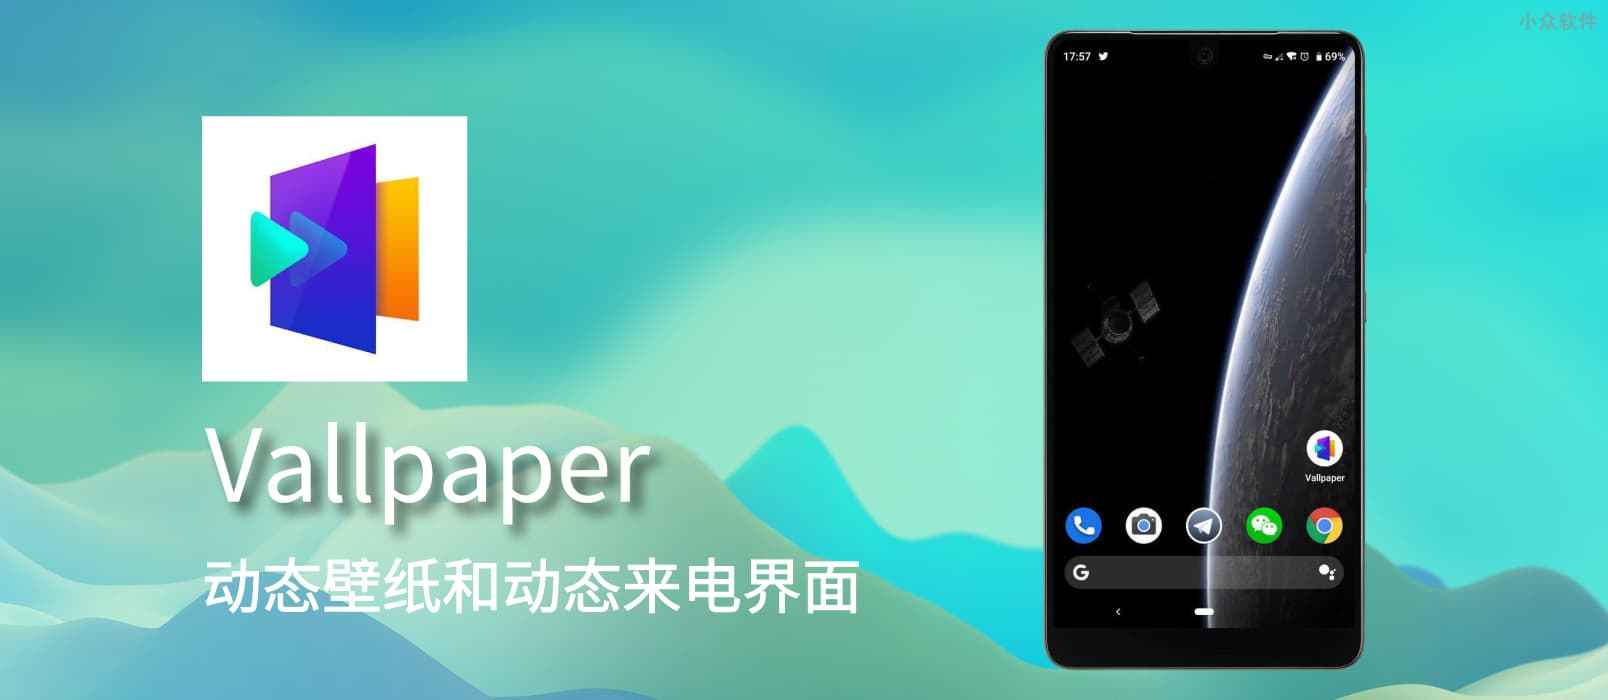 Vallpaper – 动态视频壁纸与动态来电秀界面 [Android]